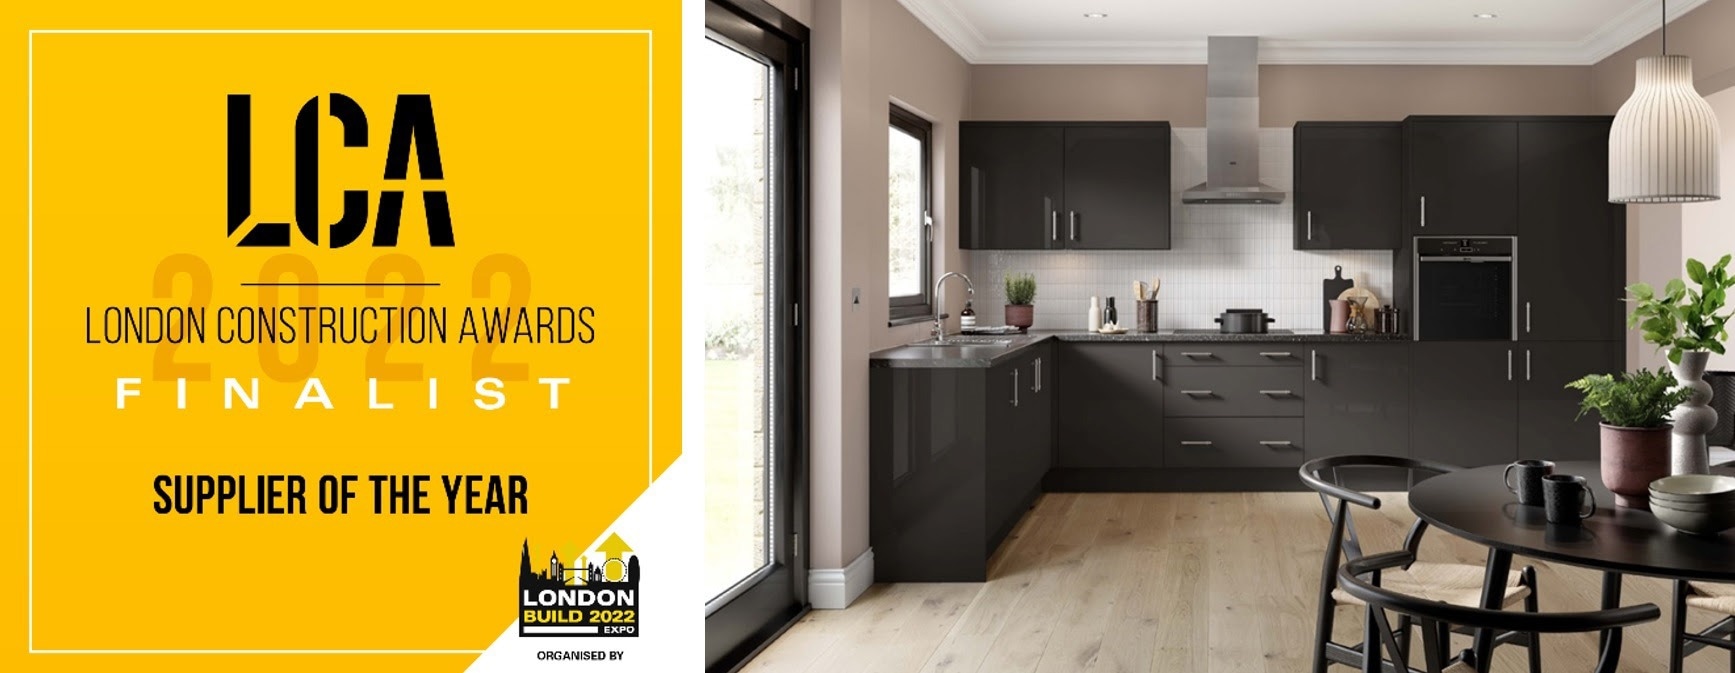 Kitchen Kit Named Finalist at London Construction Awards